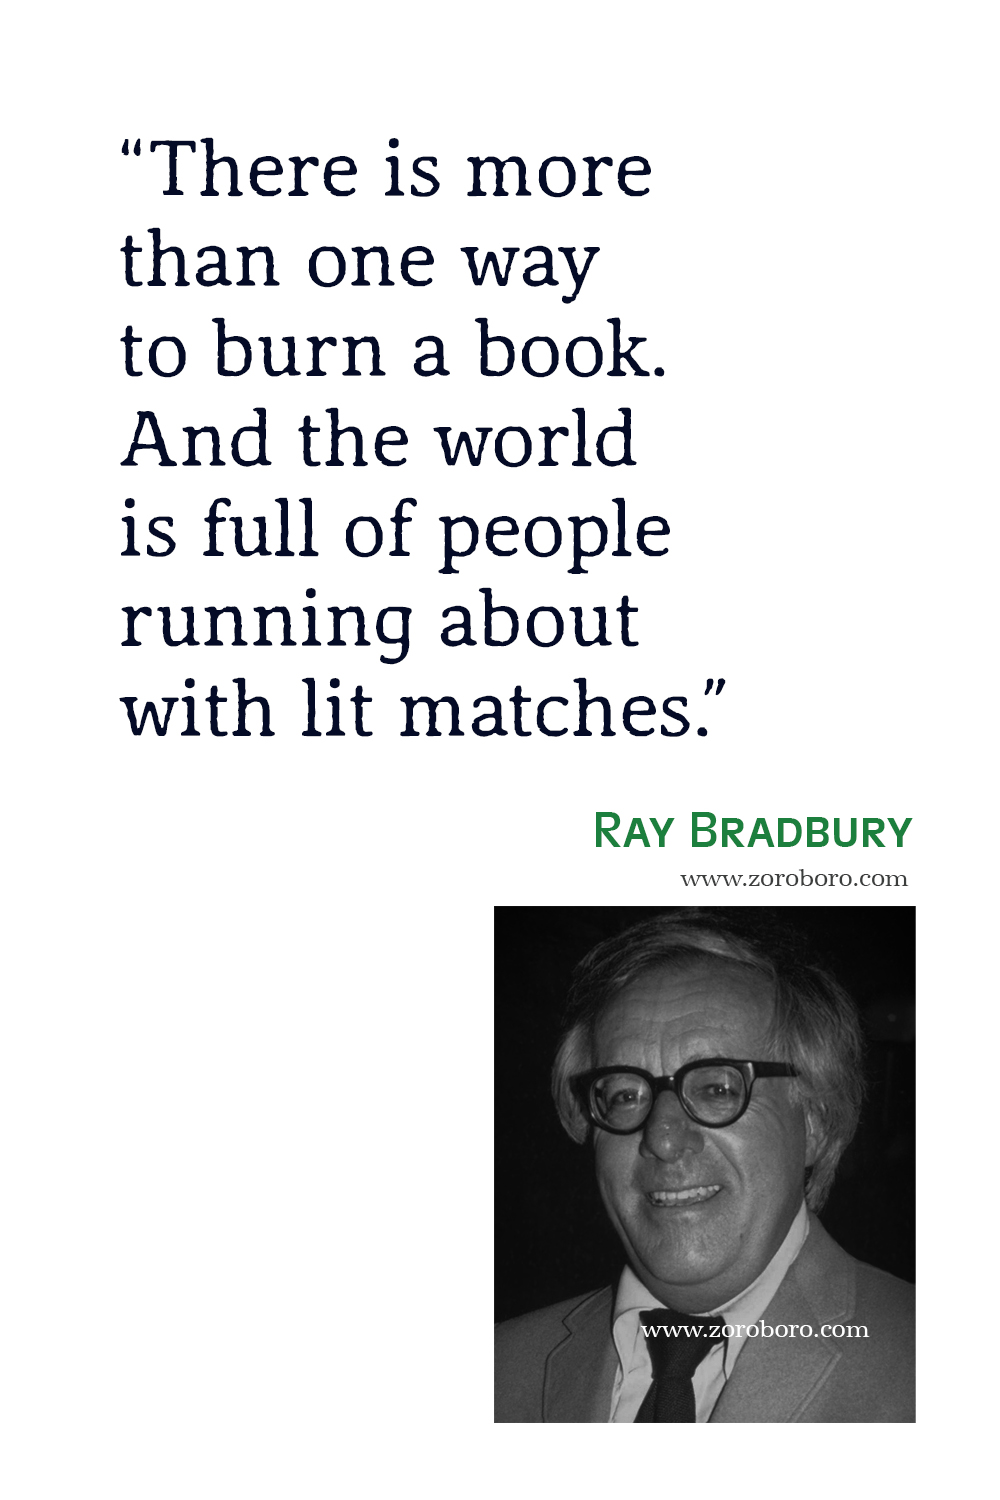 Ray Bradbury Quotes, Ray Bradbury Fahrenheit 451 Quotes, Ray Bradbury Dandelion Wine Quotes, Ray Bradbury Books Quotes, Ray Bradbury .